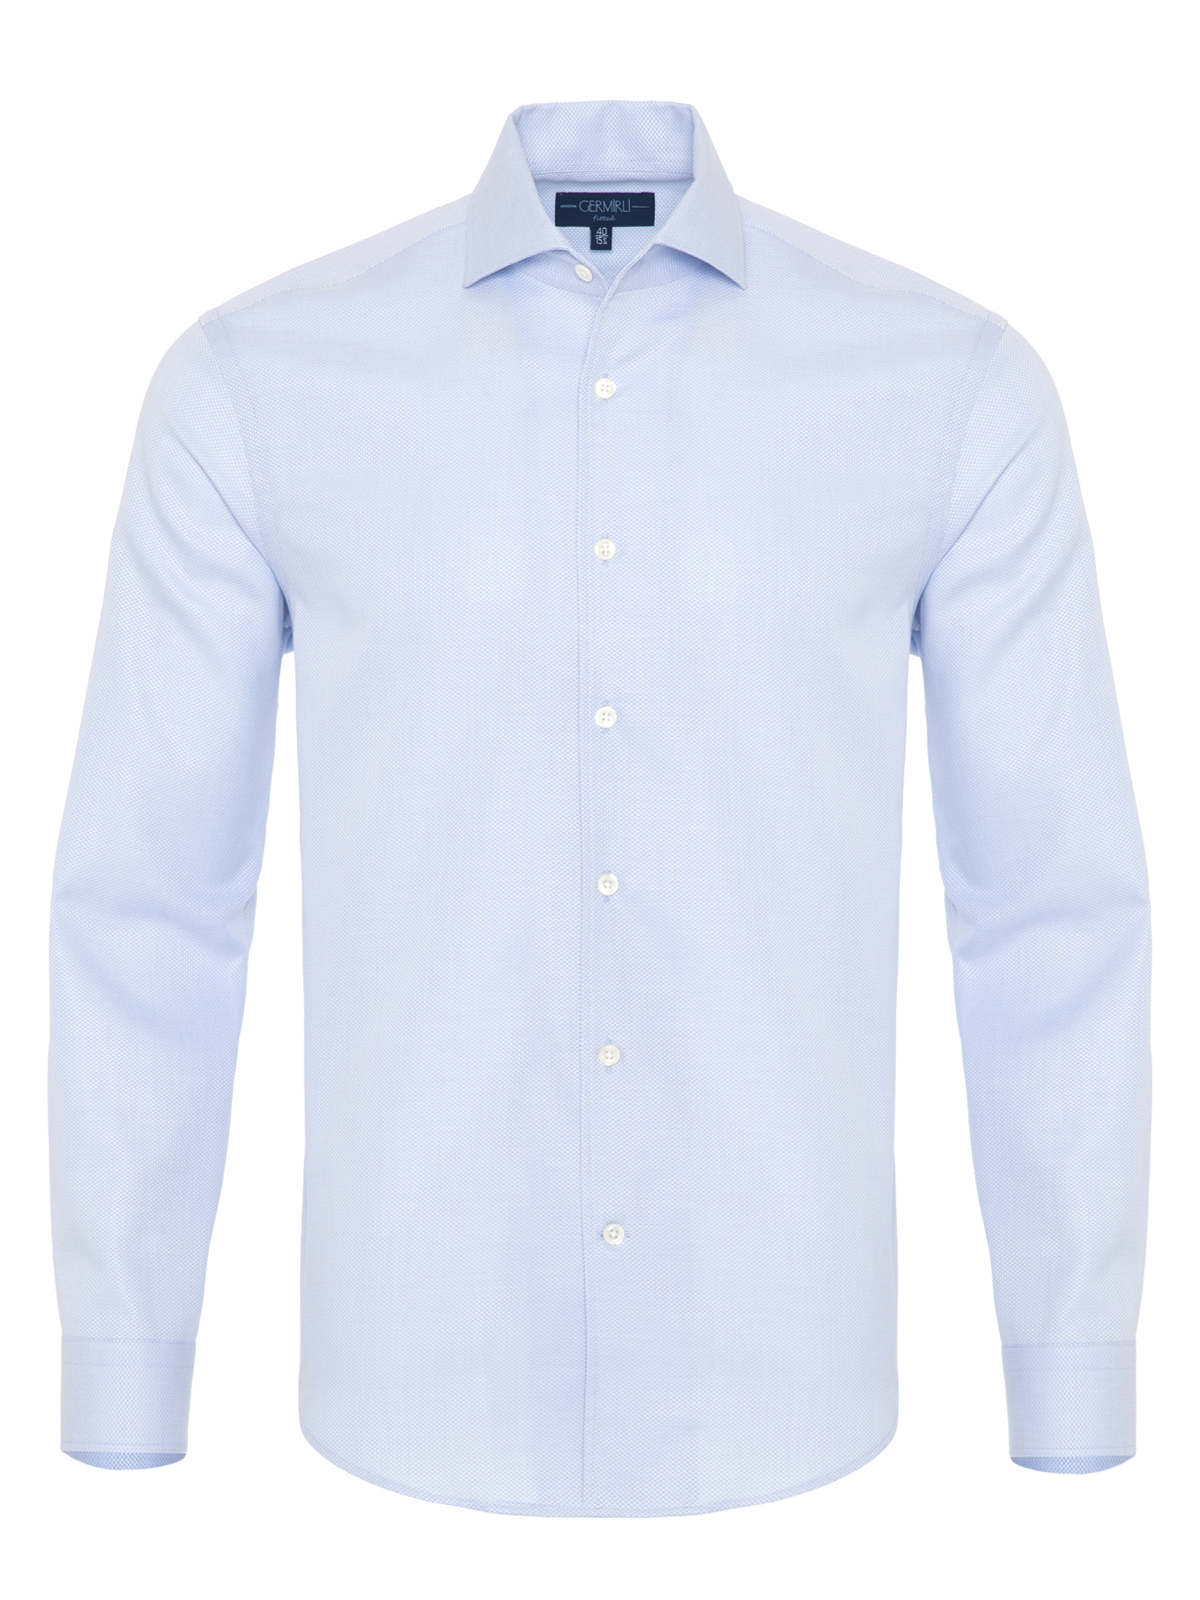 Germirli - Germirli Light Blue Honeycomb Textured One Piece Collar Tailor Fit Shirt